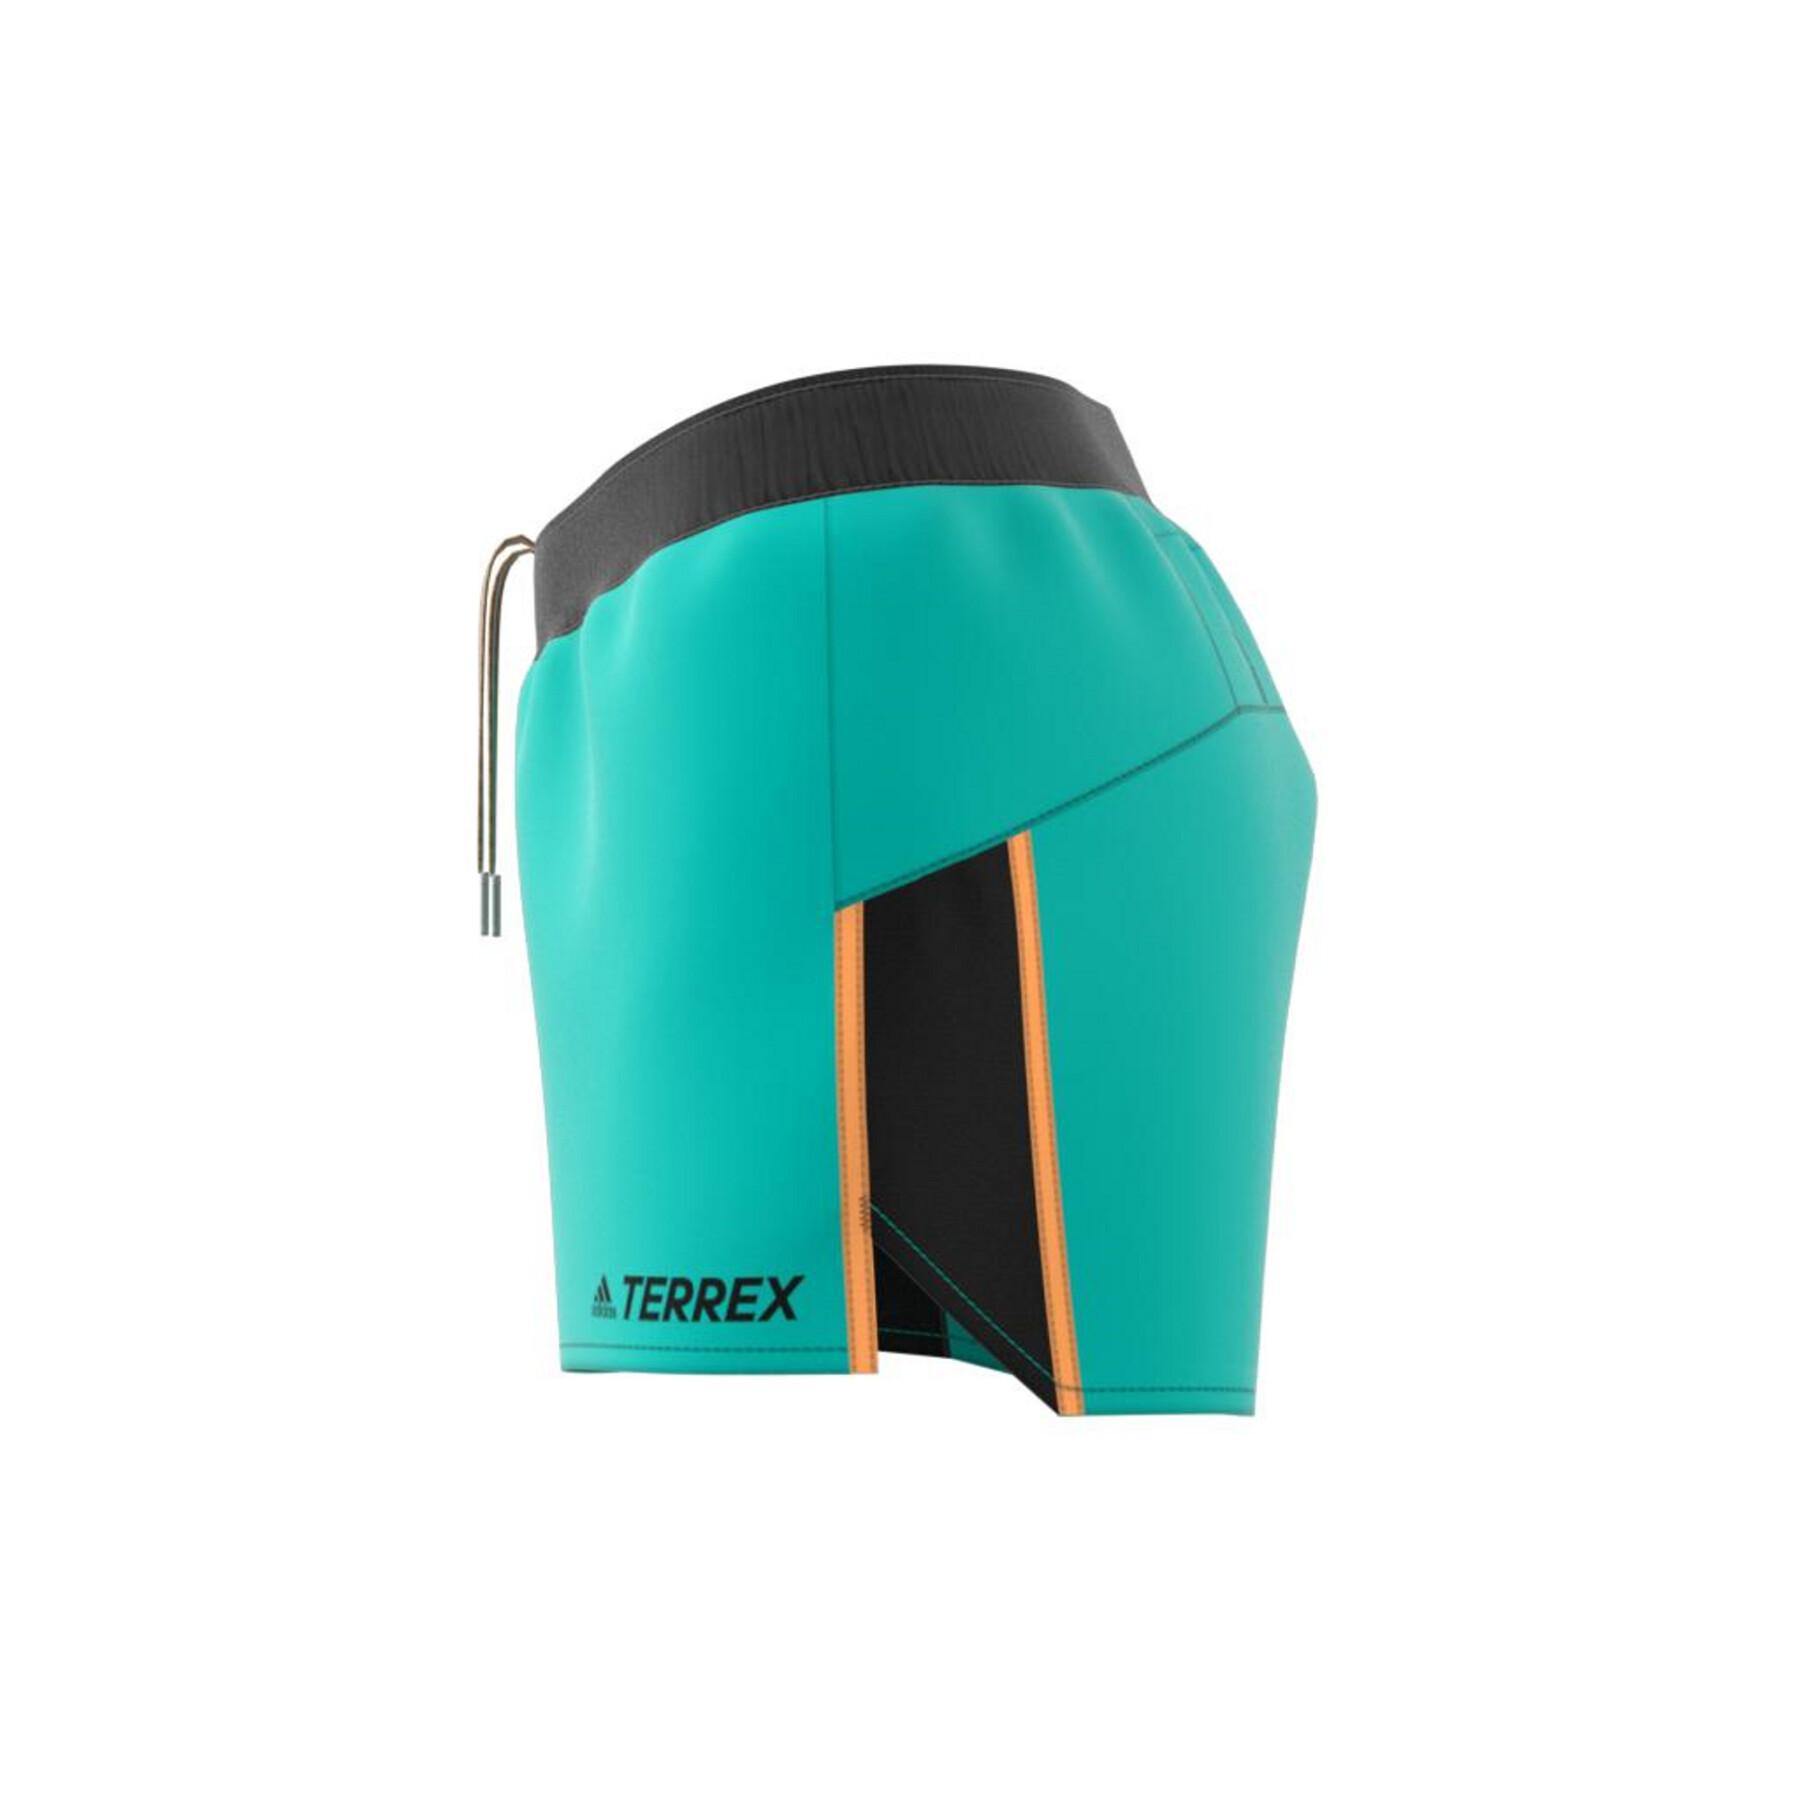 Pantalones cortos de mujer adidas Terrex Primeblue Trail Running